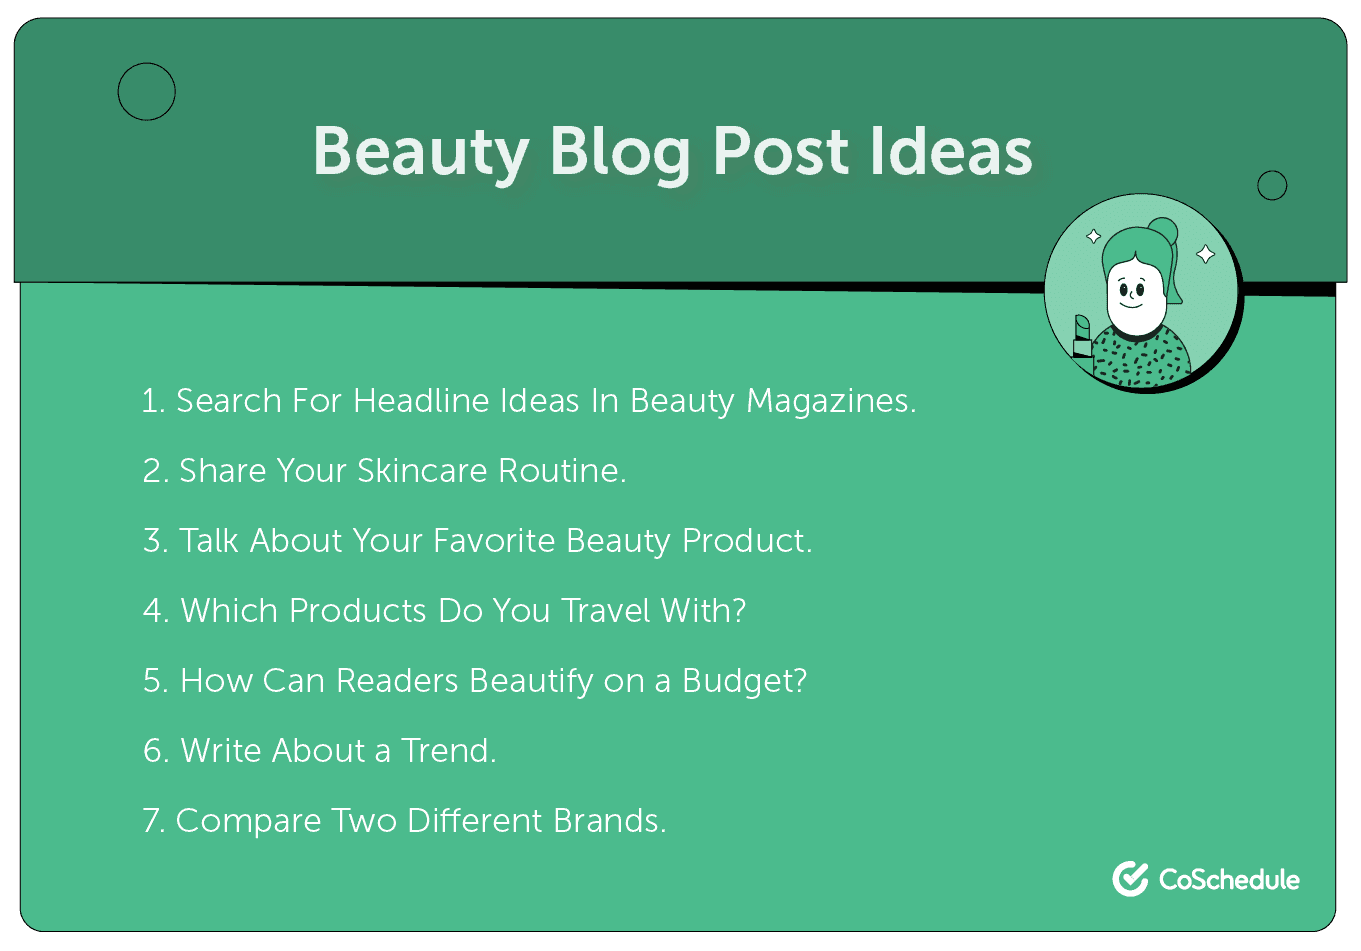 Beauty blog post ideas.